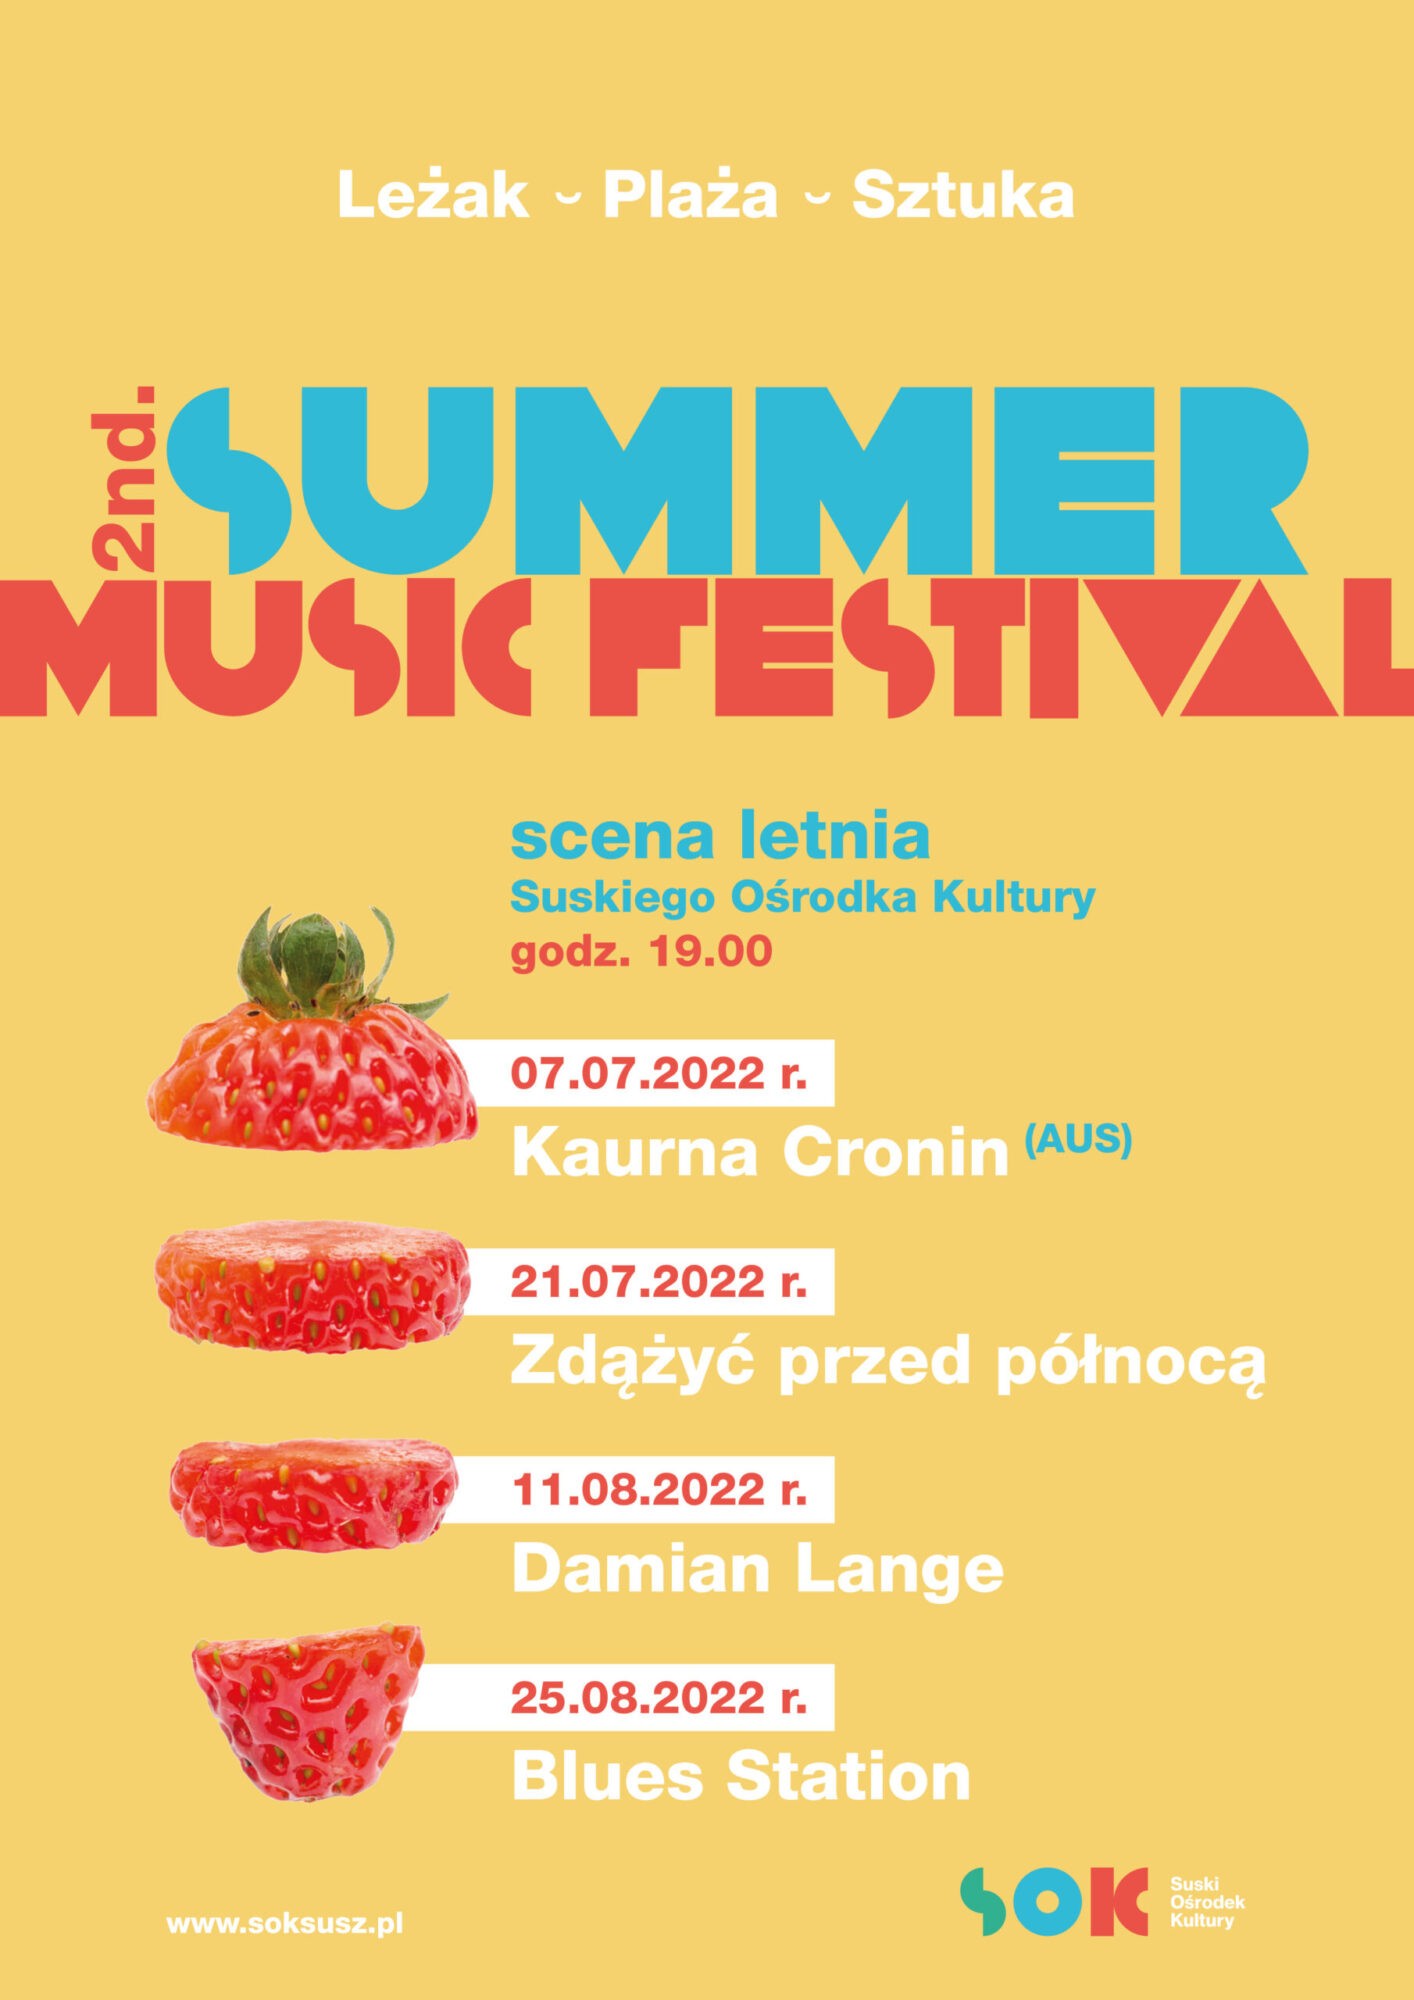 SUMMER MUSIC FESTIVAL / Kaurna Cronin 07.07 19:00